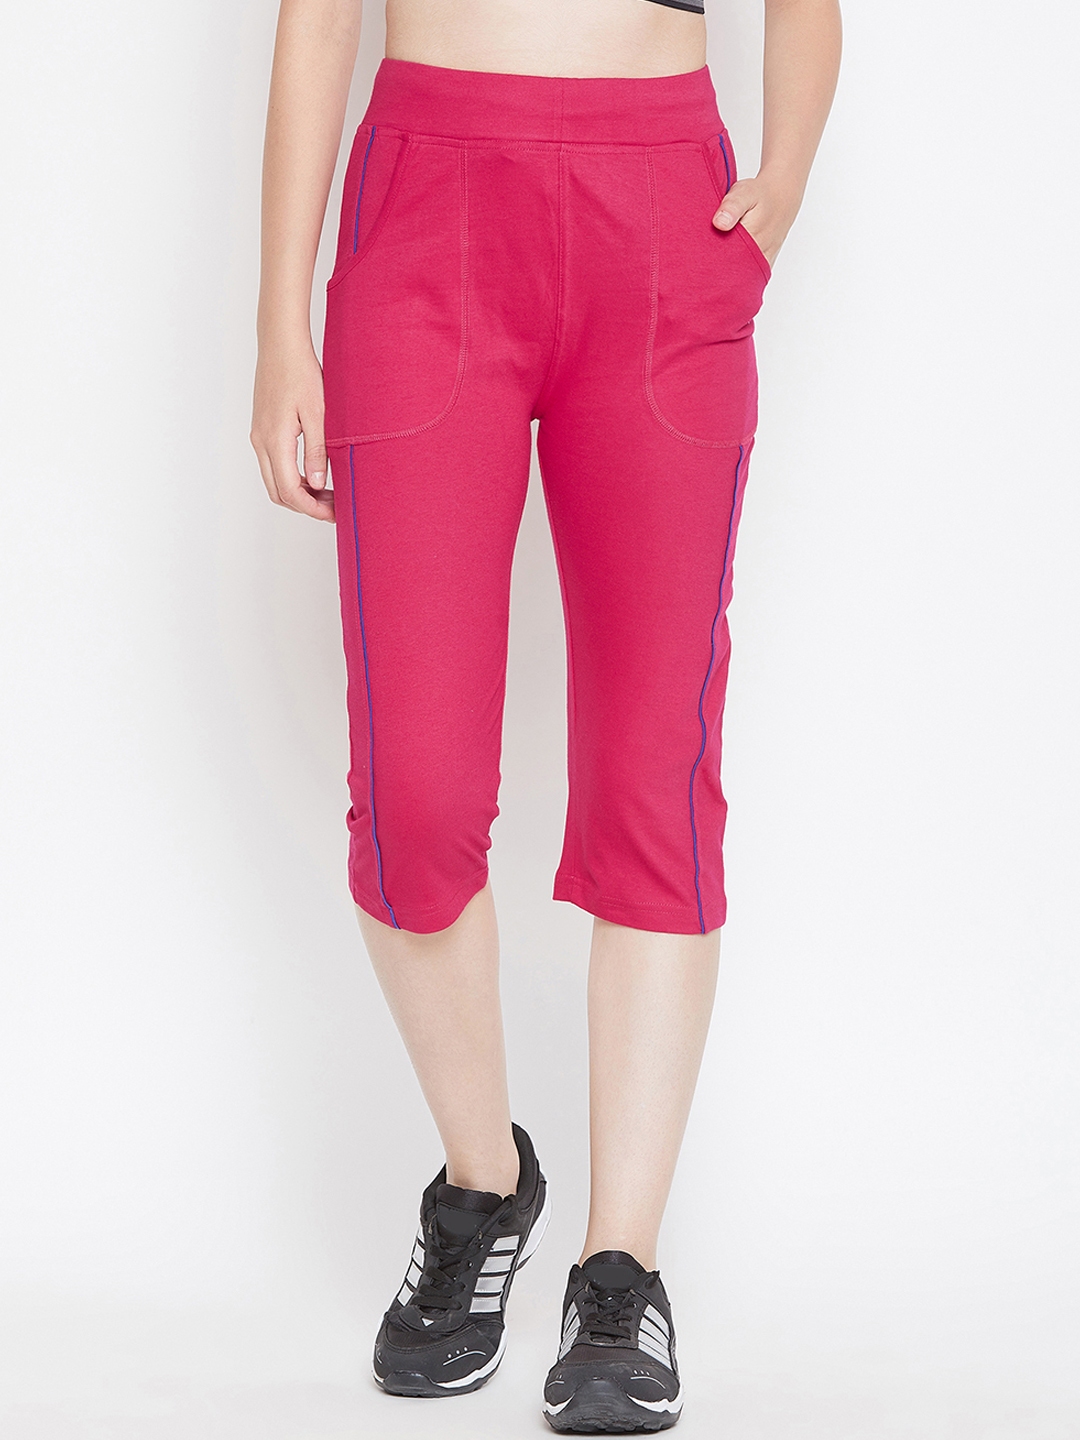 Buy C9 AIRWEAR Women Pink Solid Capris - Capris for Women 9981547 | Myntra